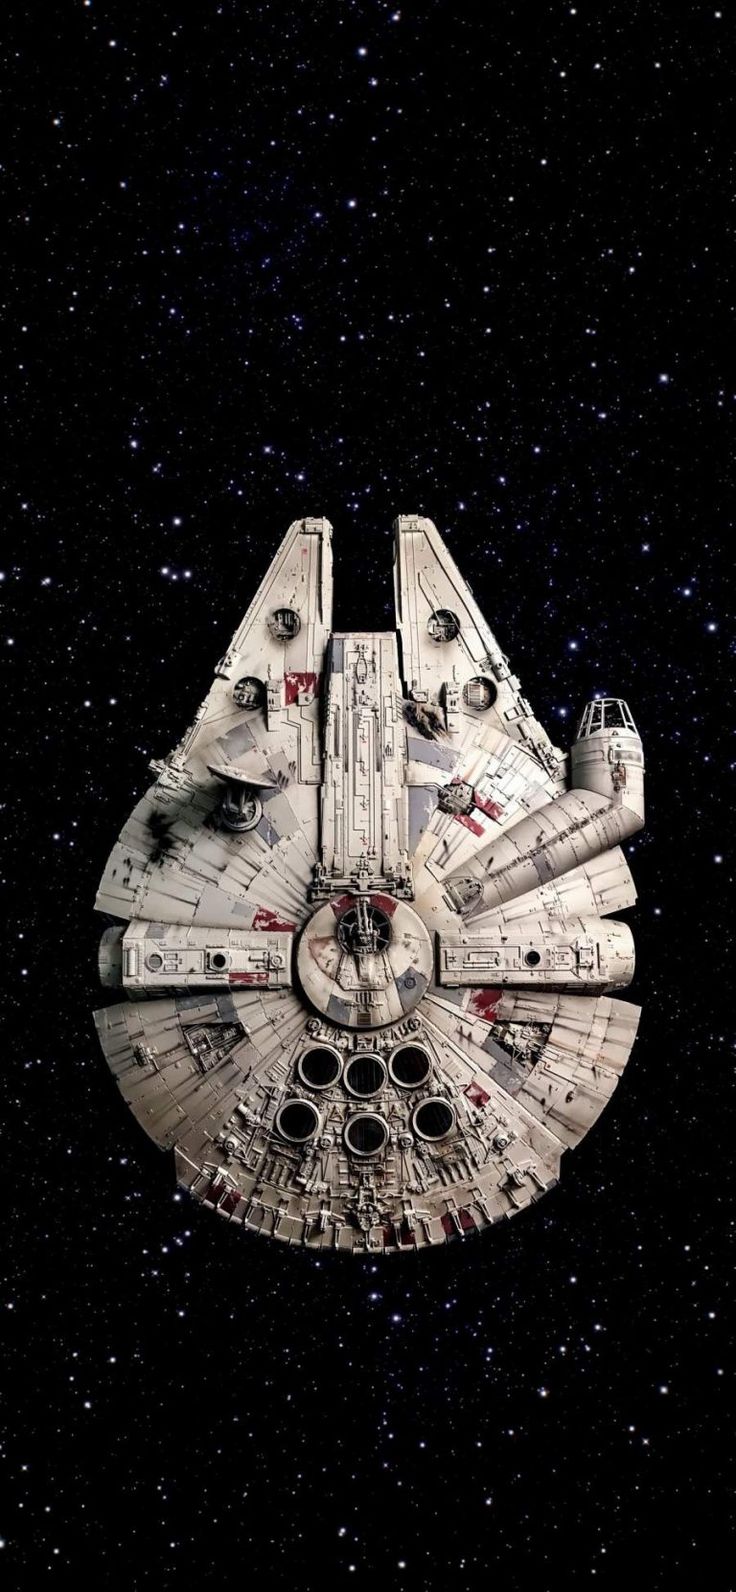 Star Wars Millennium Falcon Ship iPhone Wallpaper